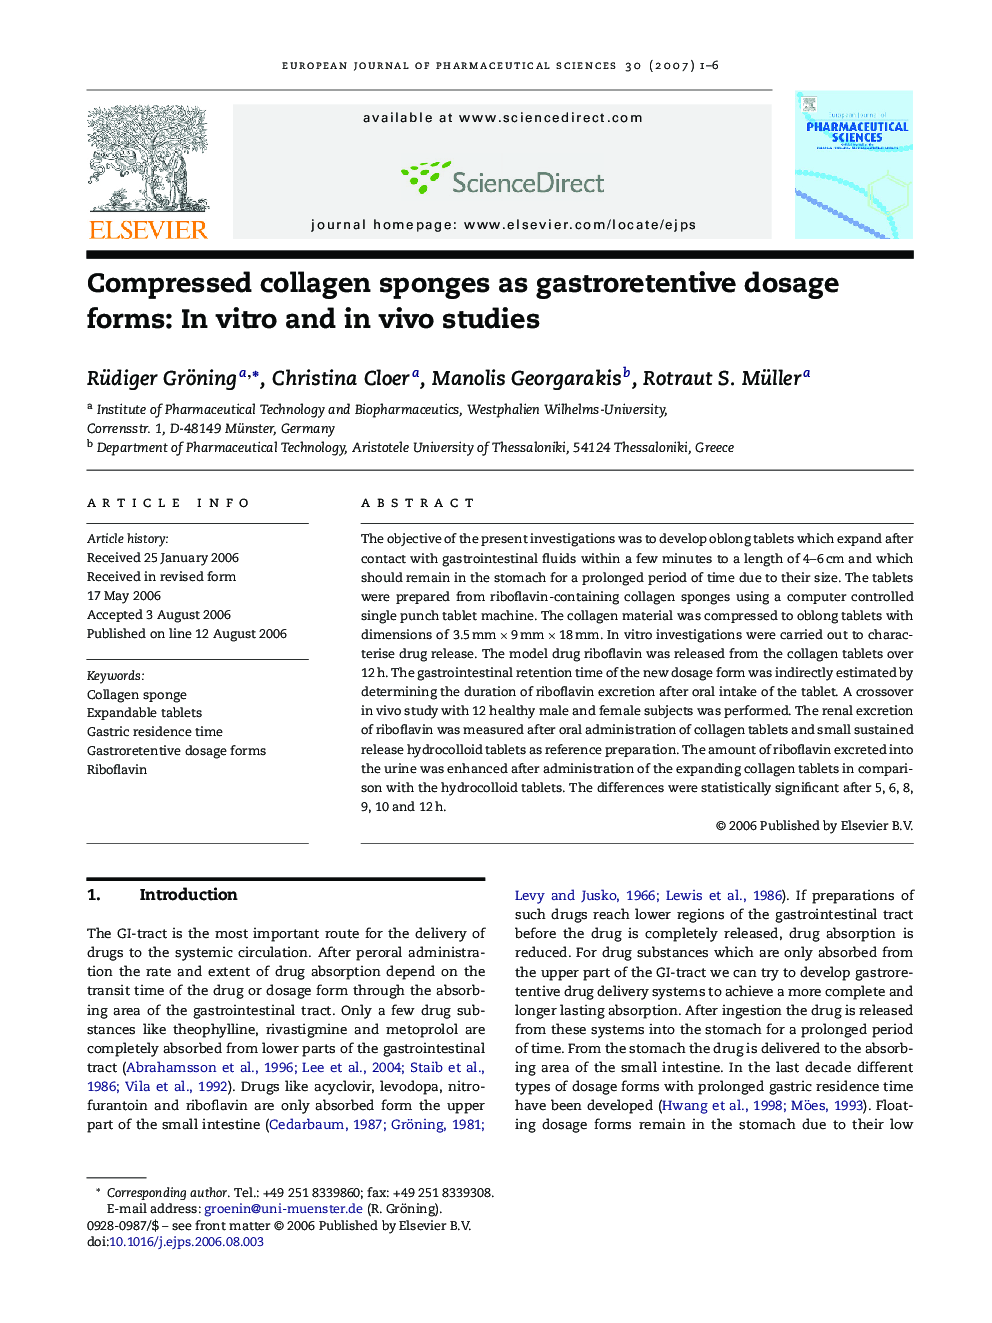 Compressed collagen sponges as gastroretentive dosage forms: In vitro and in vivo studies